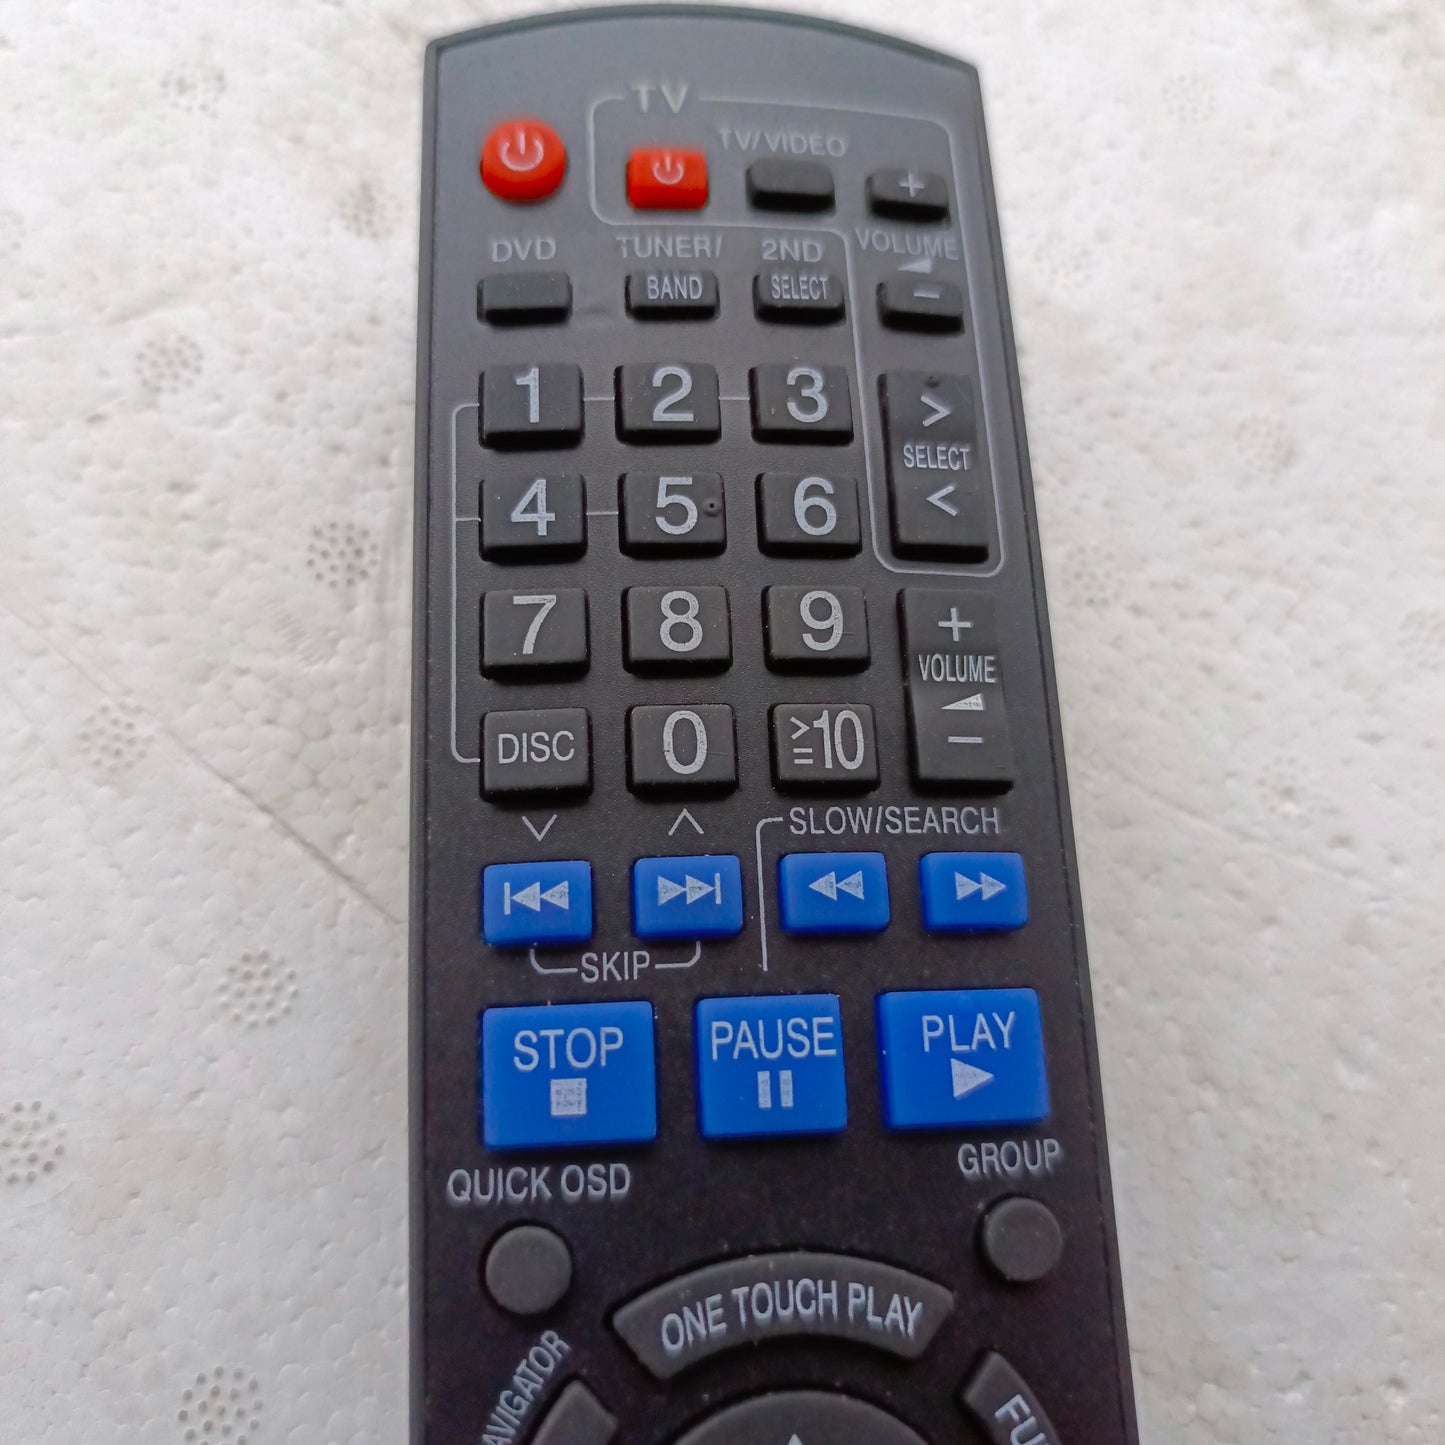 Panasonic Universal Home Theater Remote Control - Brand New